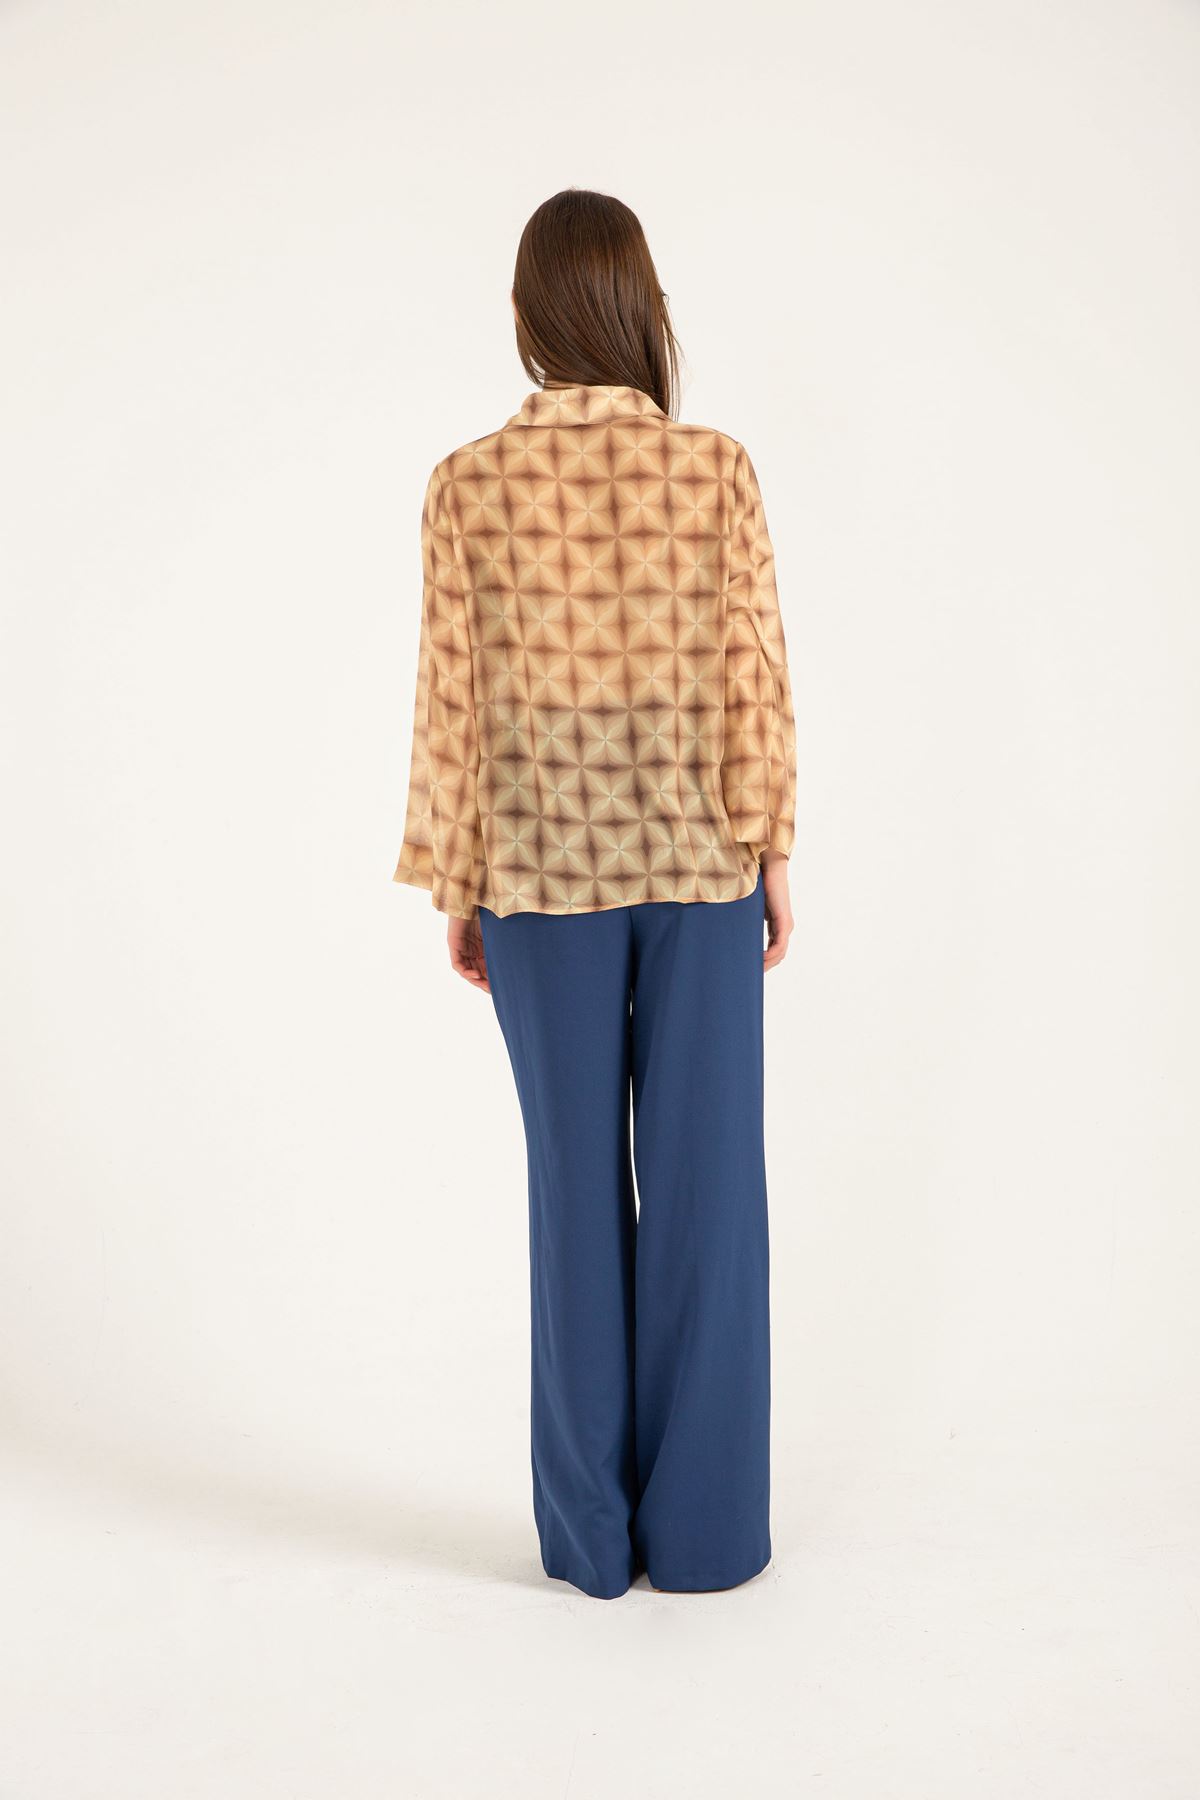 Chiffon Fabric Long Sleeve Full Fit Floral Print Women Shirt - Beige 